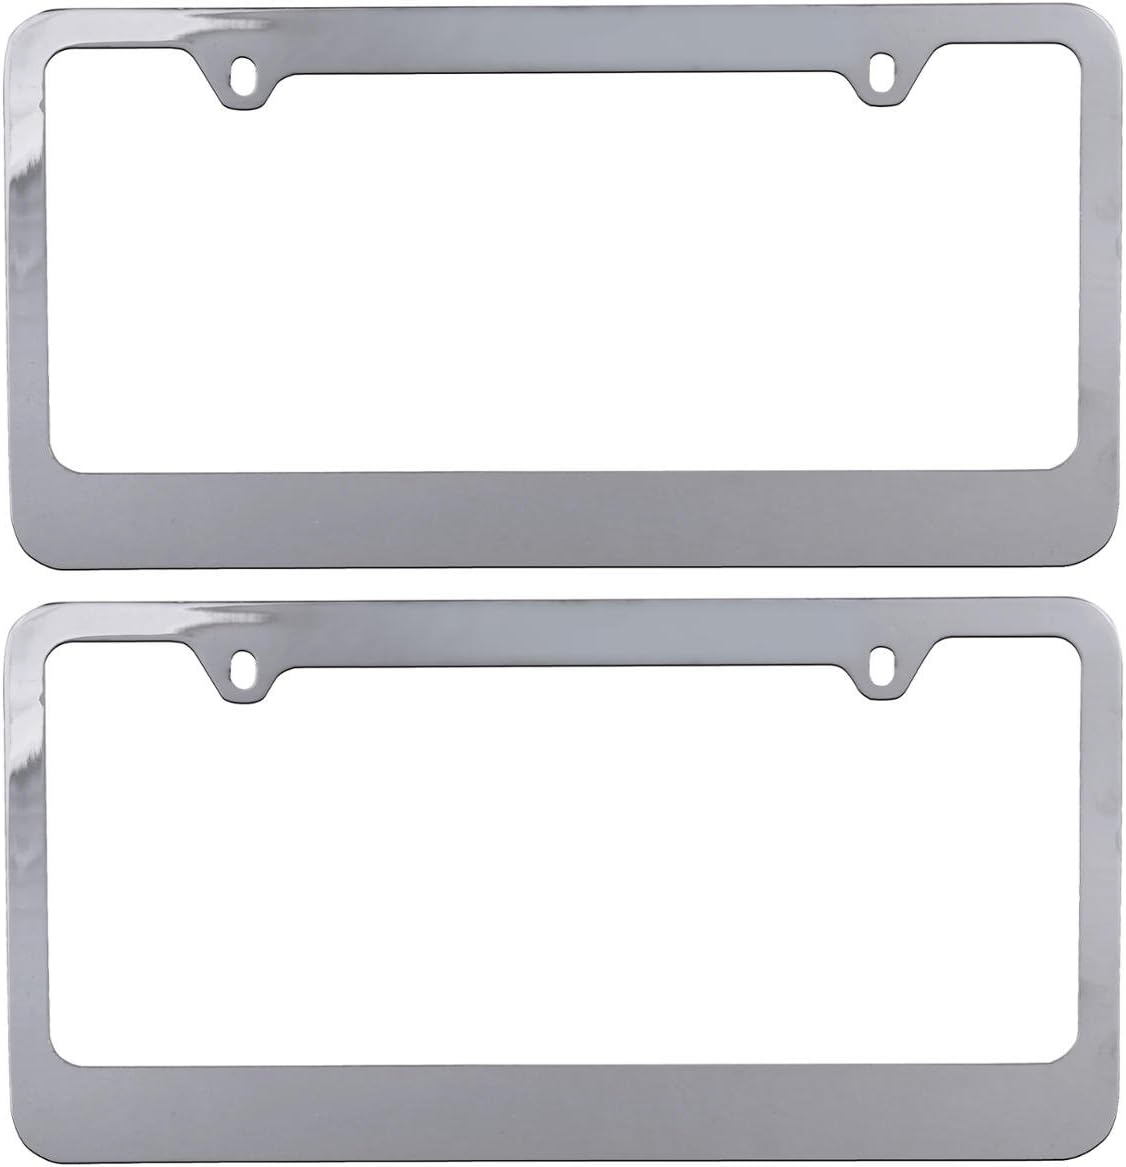 BDK Die-Cast Stainless Metal License Plate Frame/Holder Universal Size - Blank Metal Design (Pack of 2)